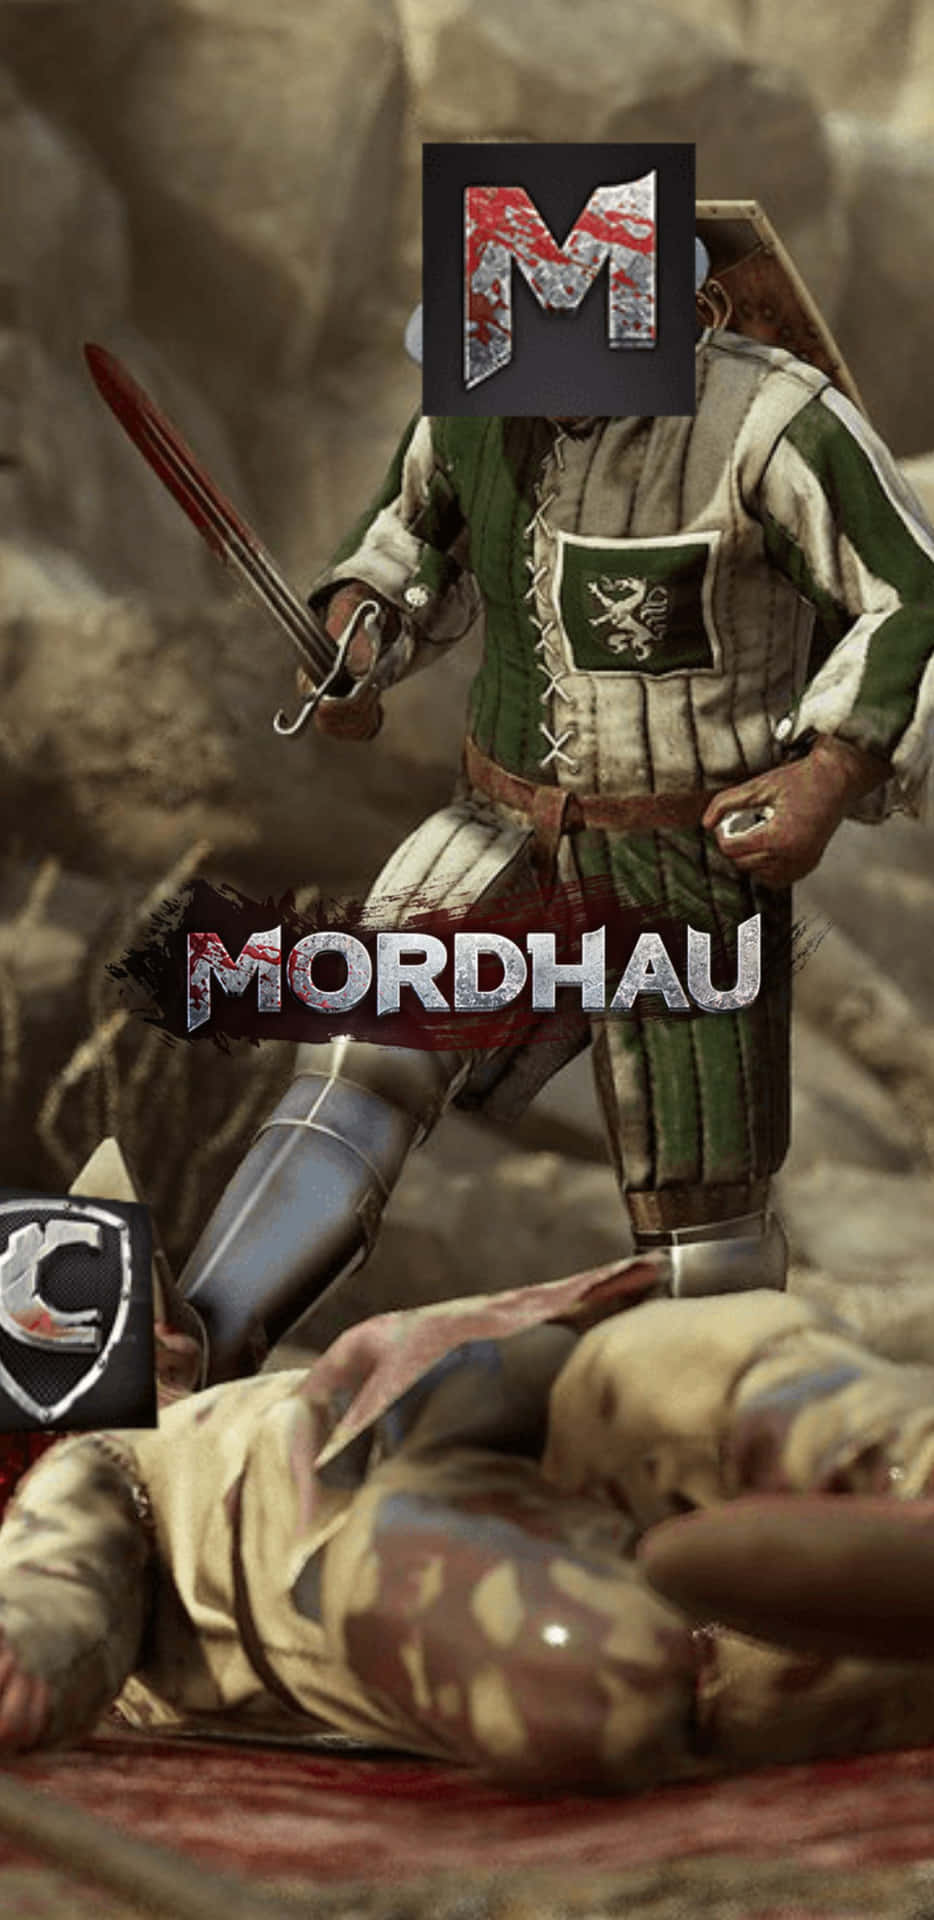 Mordhau C - A Man With A Sword And A Dead Body